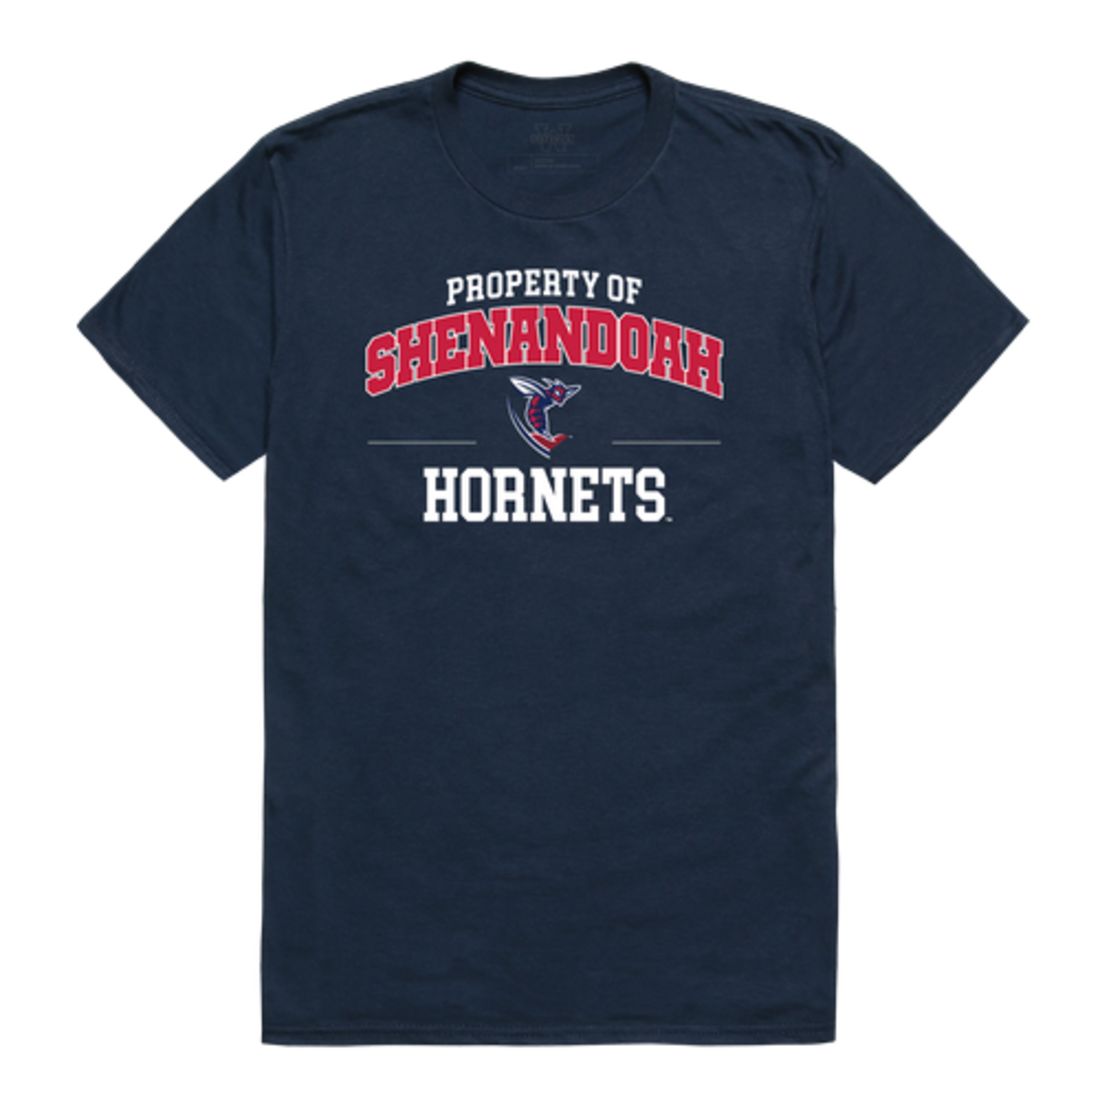 Shenandoah University Hornets Property T-Shirt